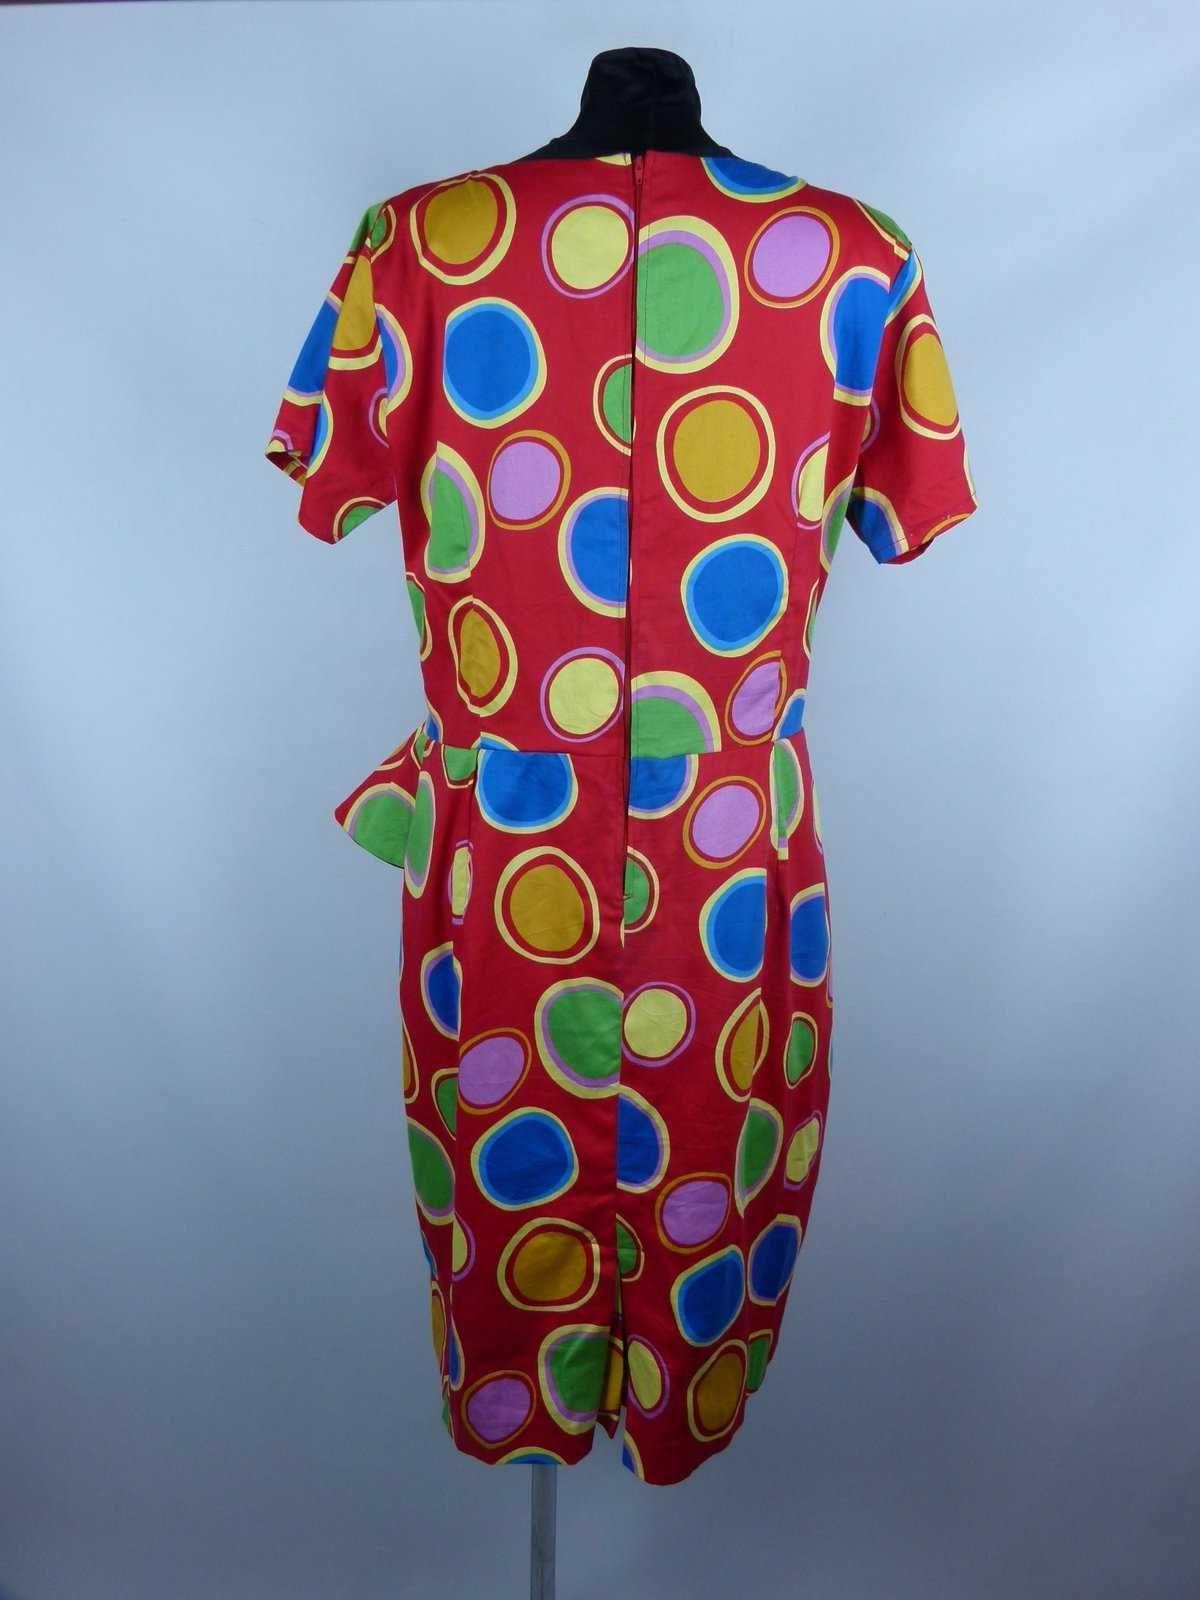 sukienka do kolan Africa Design bawełna / L